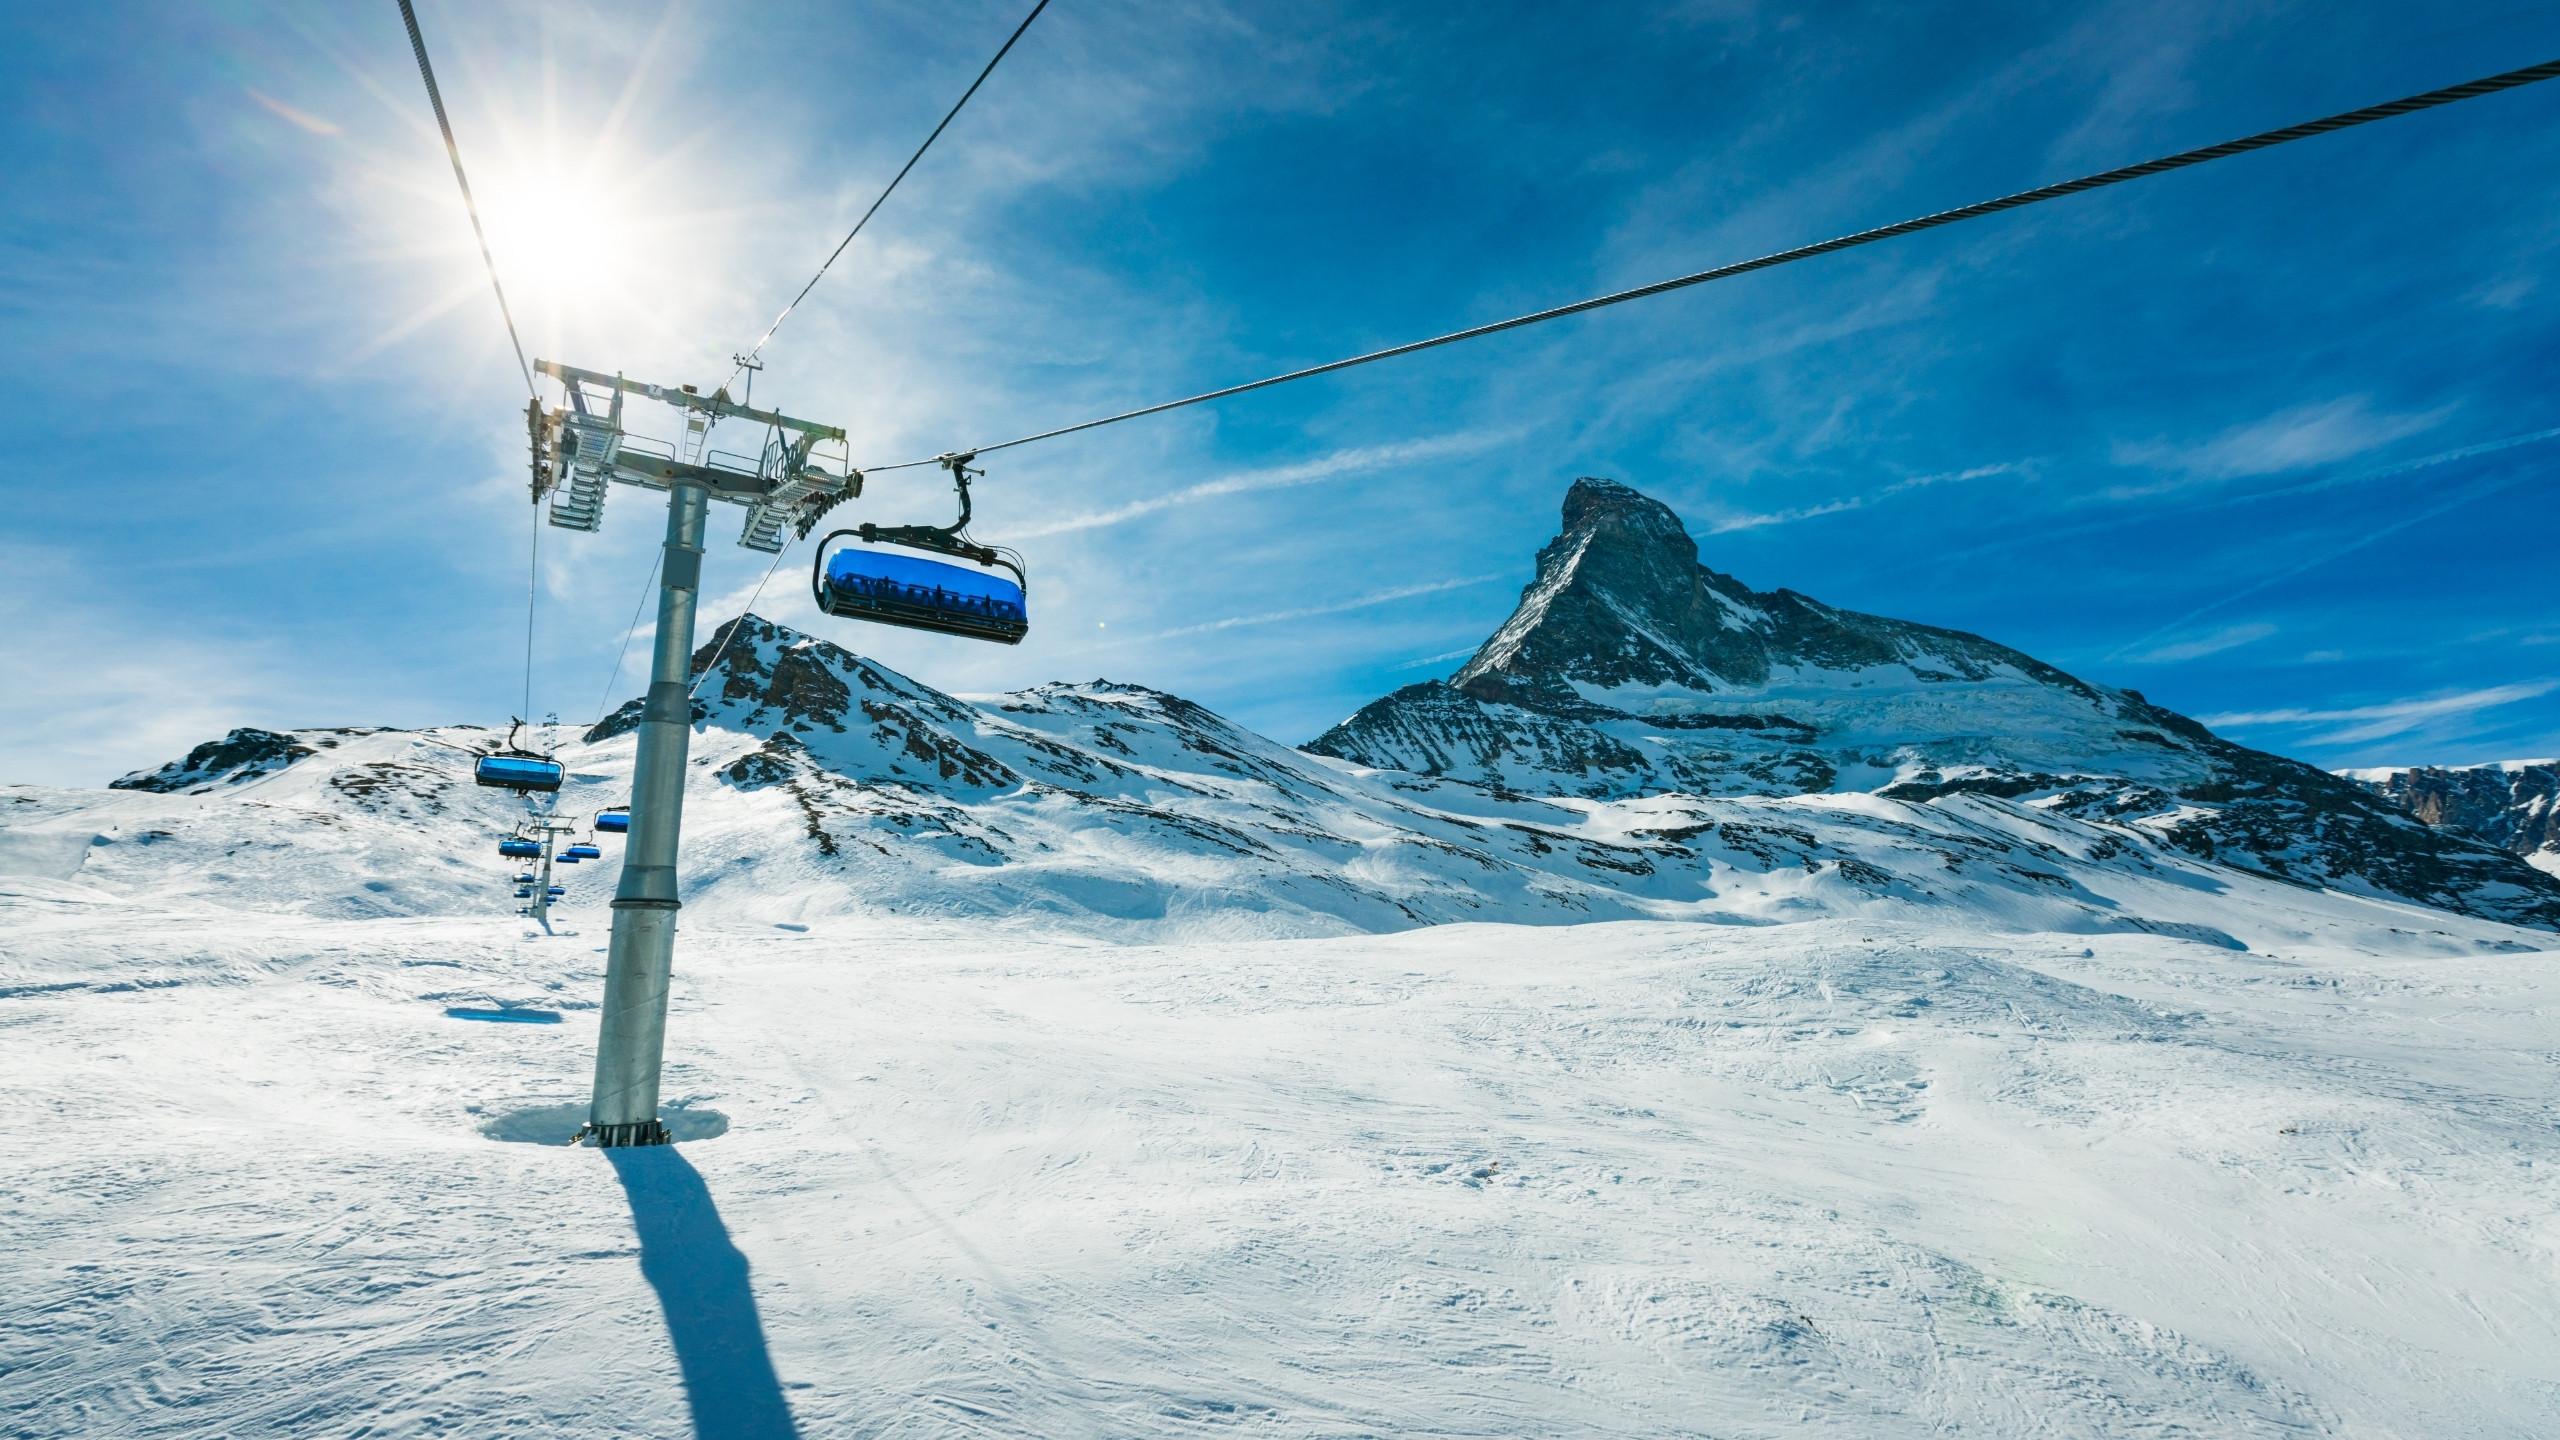 Winter ski resort Zermatt, Switzerland